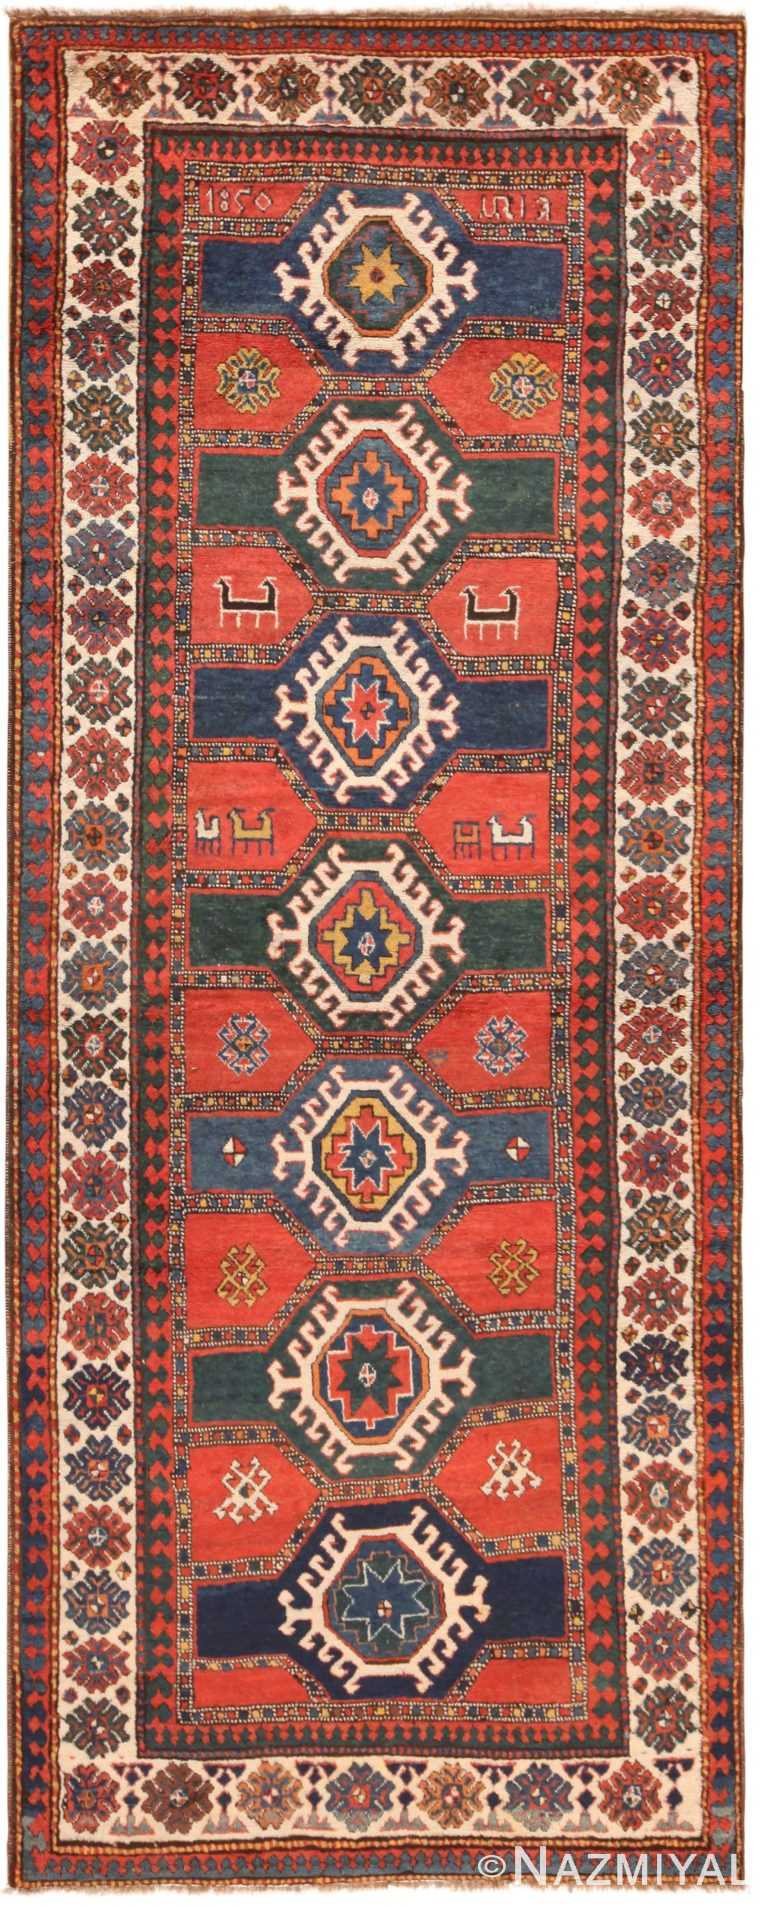 Superb Antique Caucasian Kazak Runner 71160 by Nazmiyal Antique Rugs